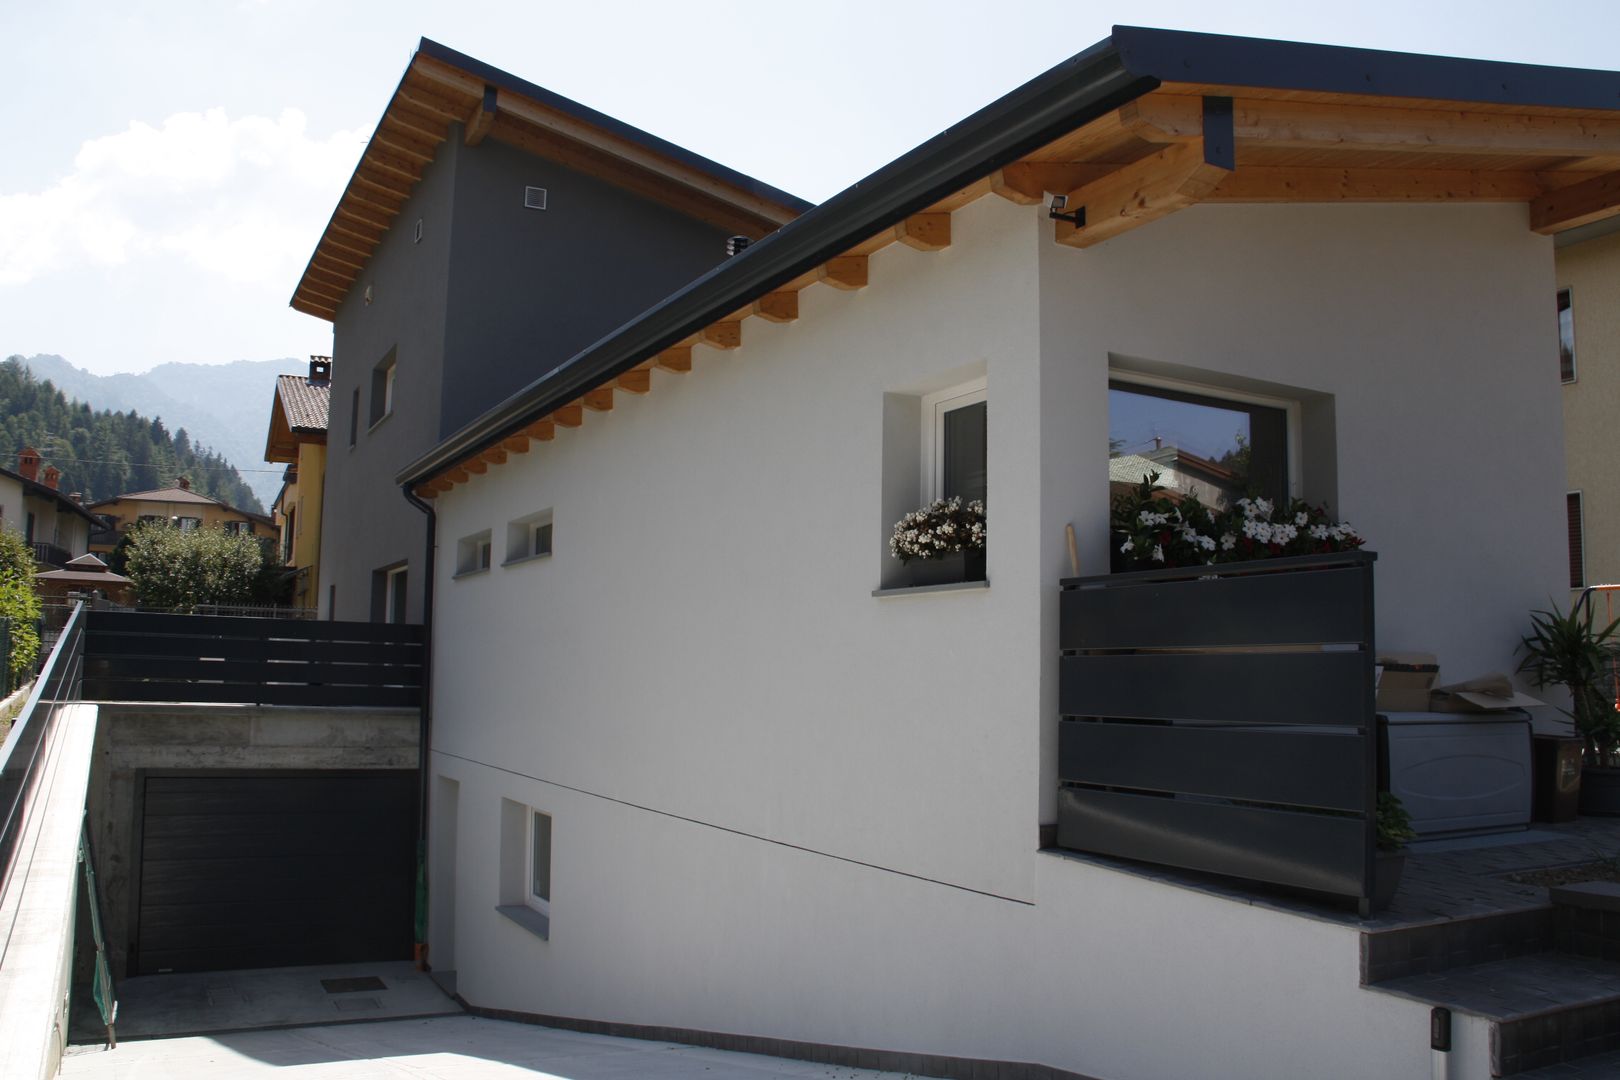 Casa in legno - provincia di Bergamo, BENDOTTI ZAMBONI Tecnici Associati BENDOTTI ZAMBONI Tecnici Associati Moderne Häuser